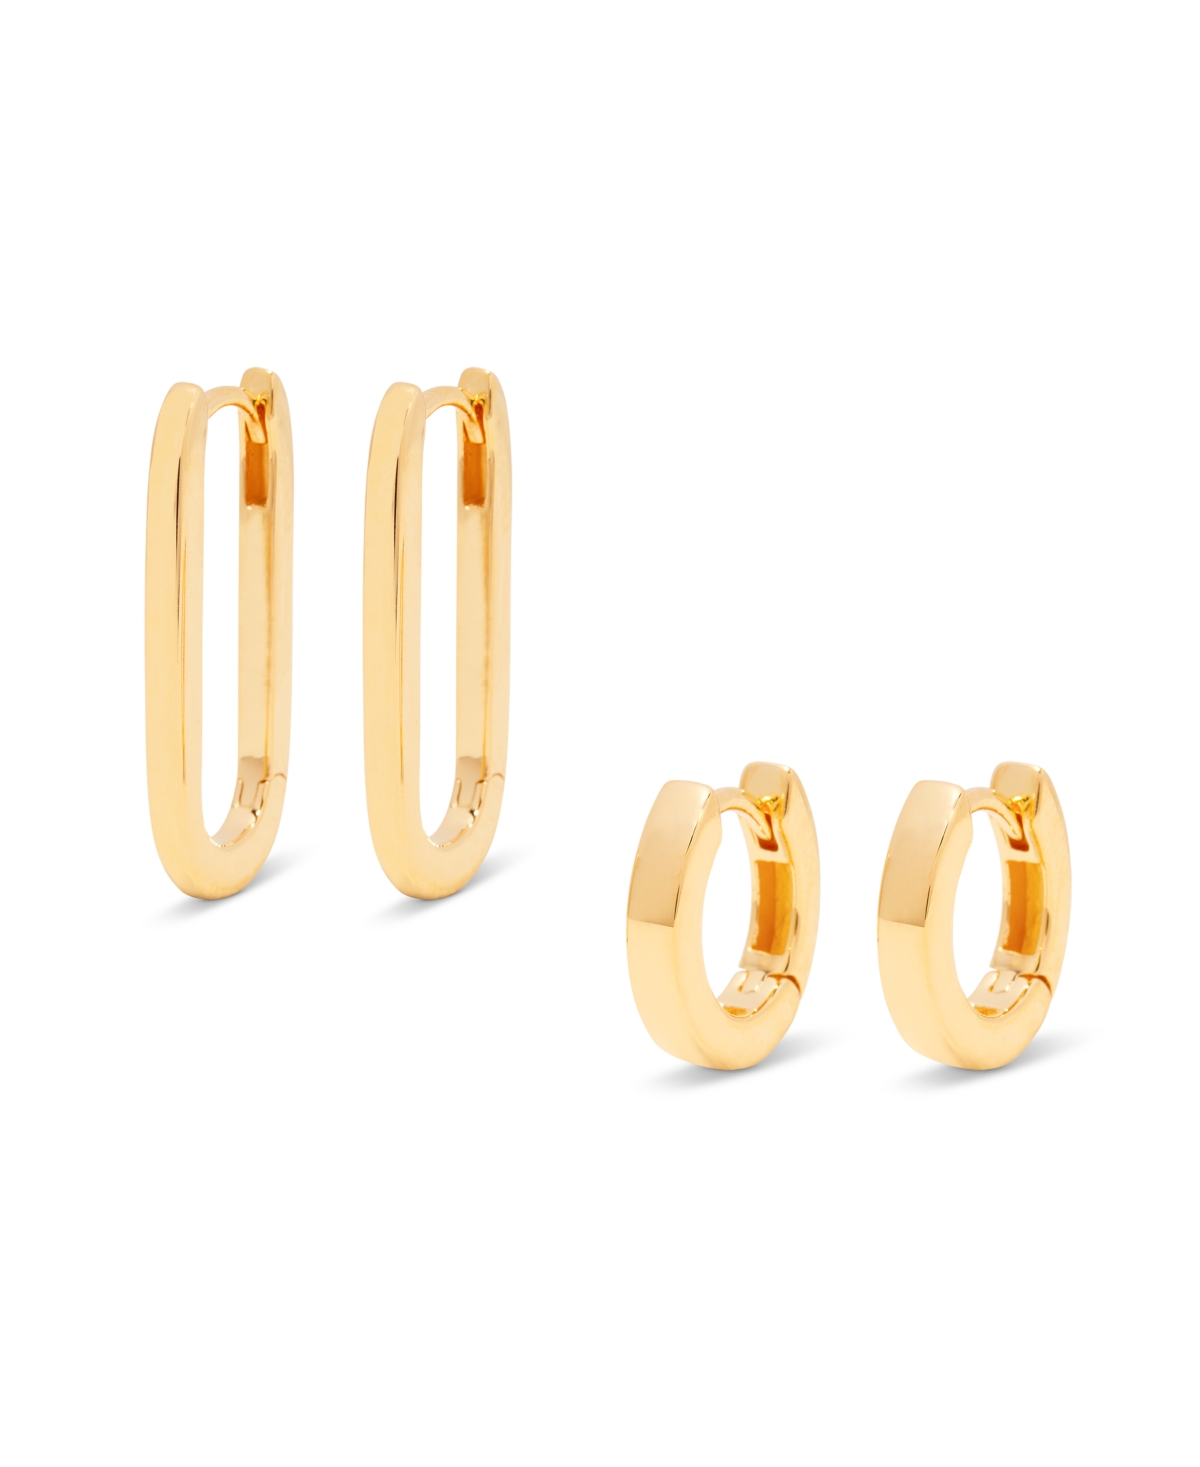 Brook & York "14k Gold" Abigale Earring Set, 4 Piece In Gold Vermeil